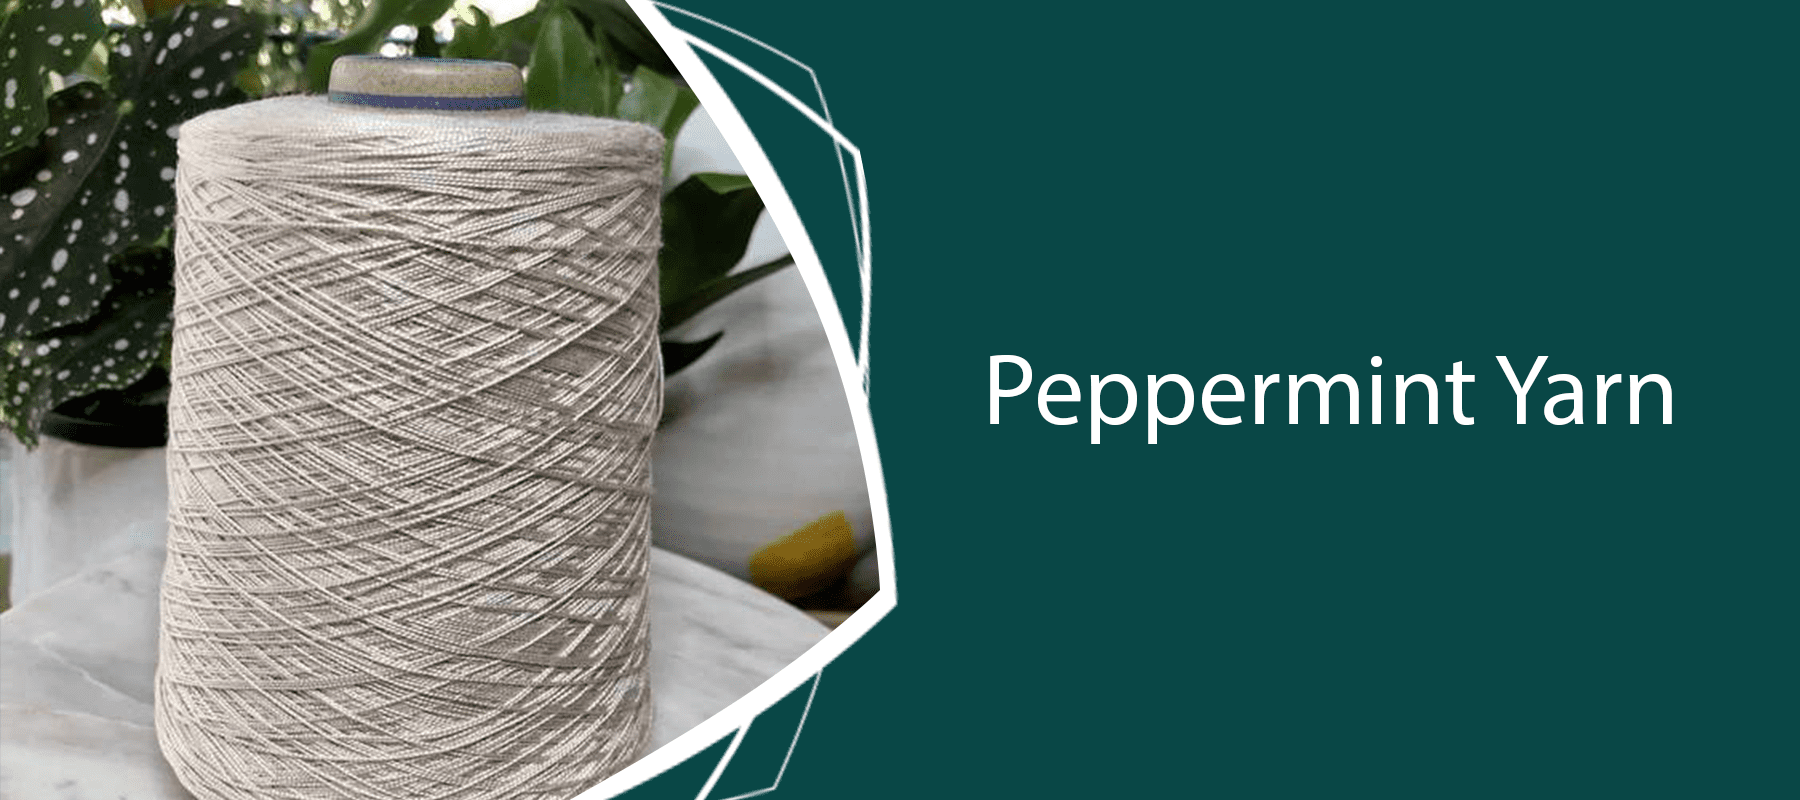 Peppermint Yarn Australia: Weaving, Knitting and Craft Yarn